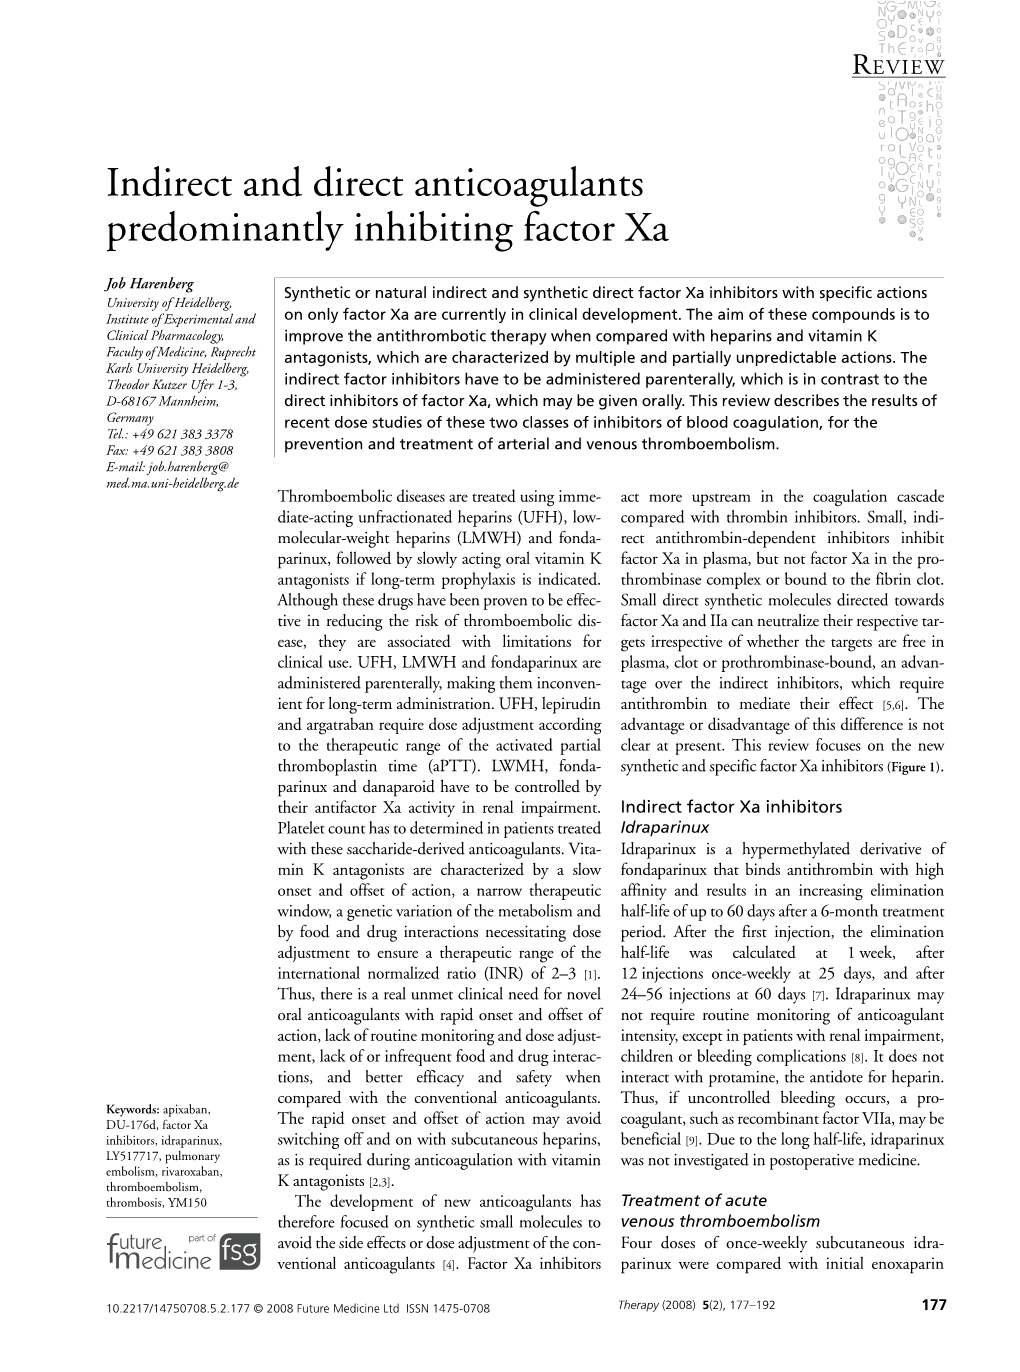 Indirect and Direct Anticoagulants Predominantly Inhibiting Factor Xa